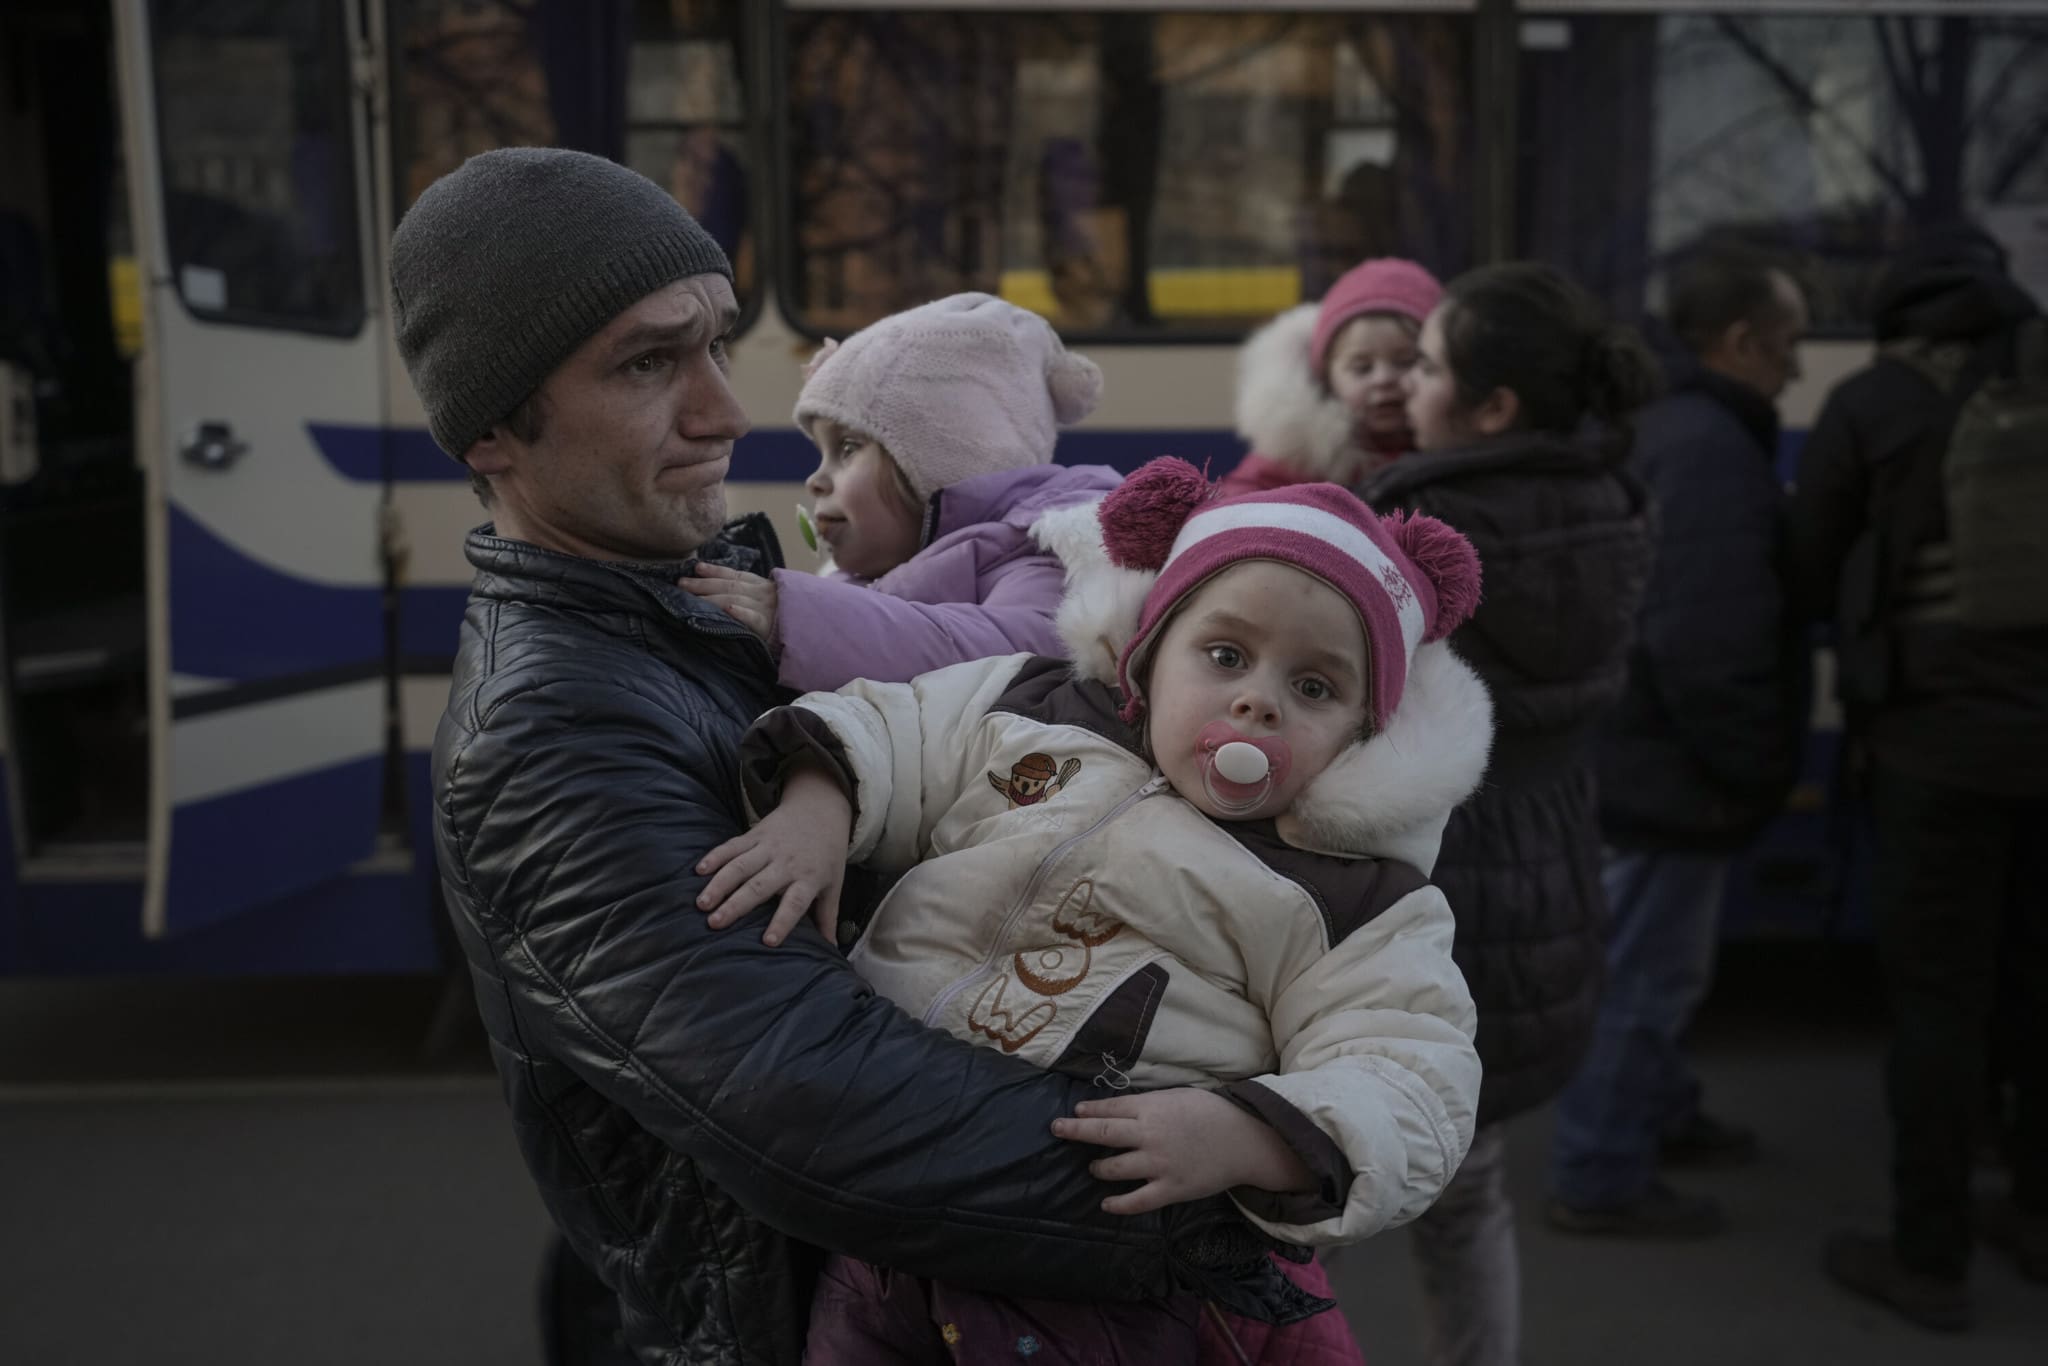 Ukraine, refugees